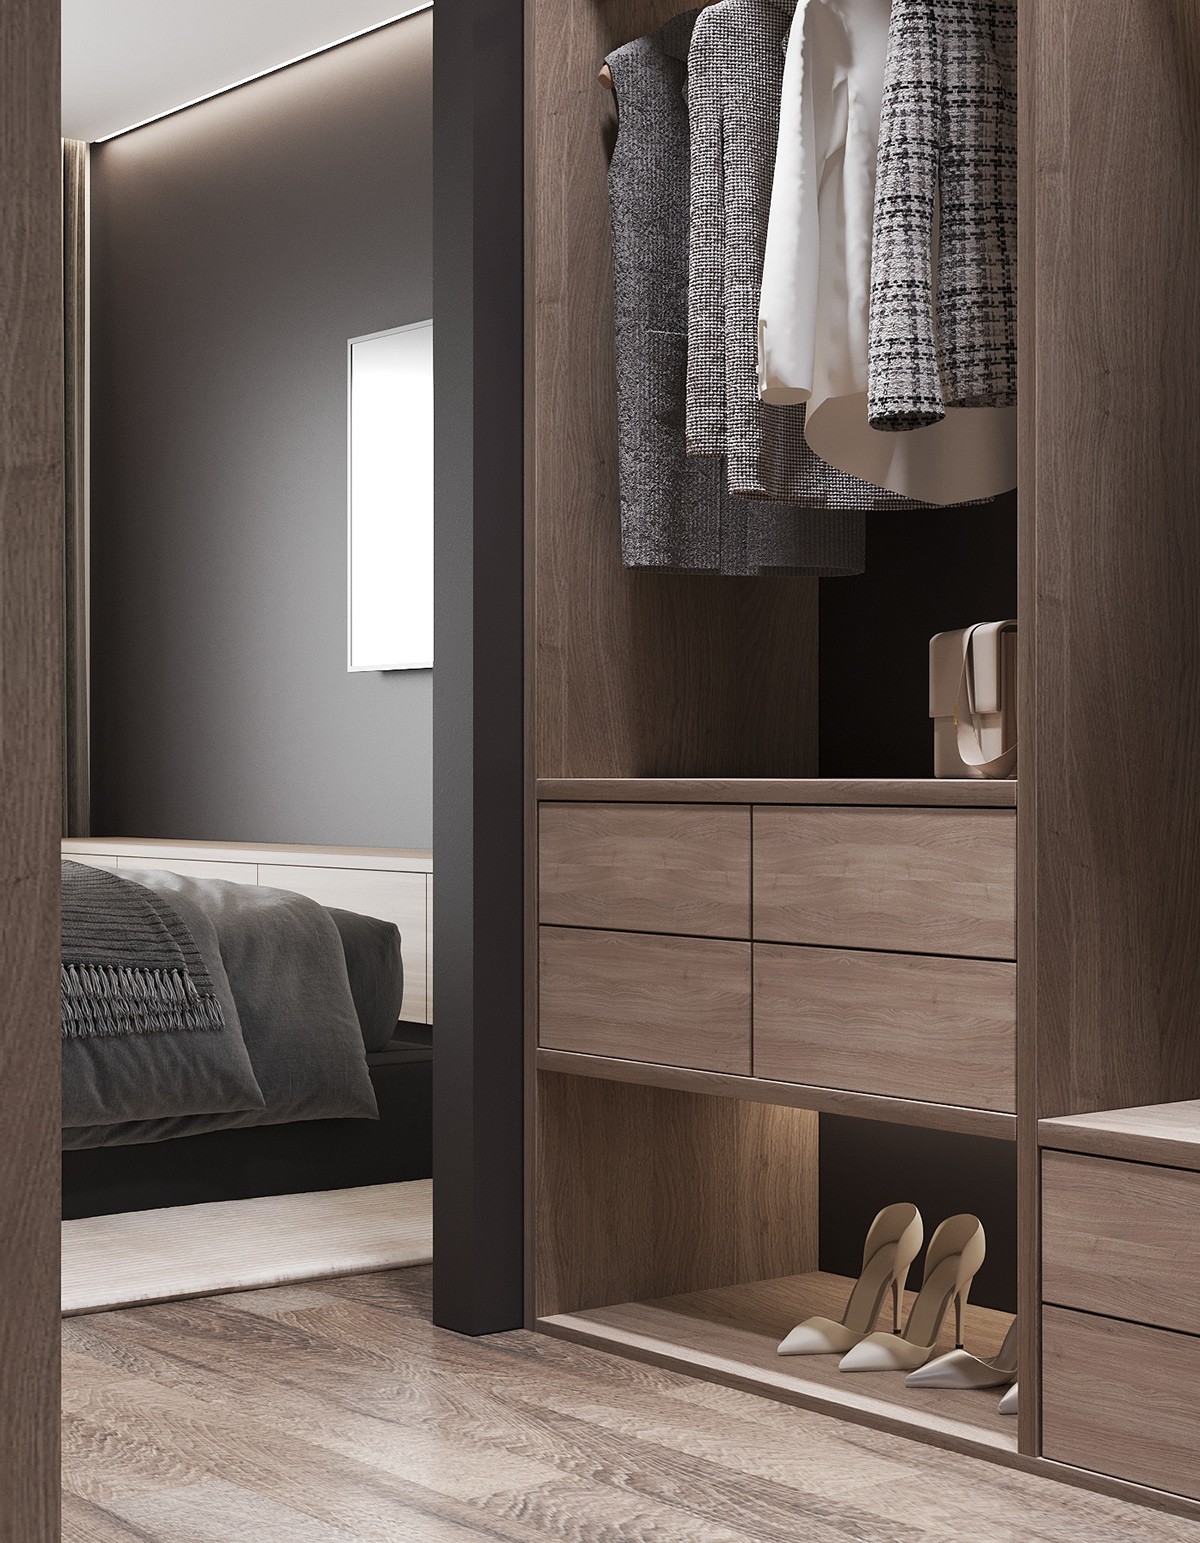 3ds max archviz bedroom bedroom design interior design  modern Render visualization дизайн интерьера